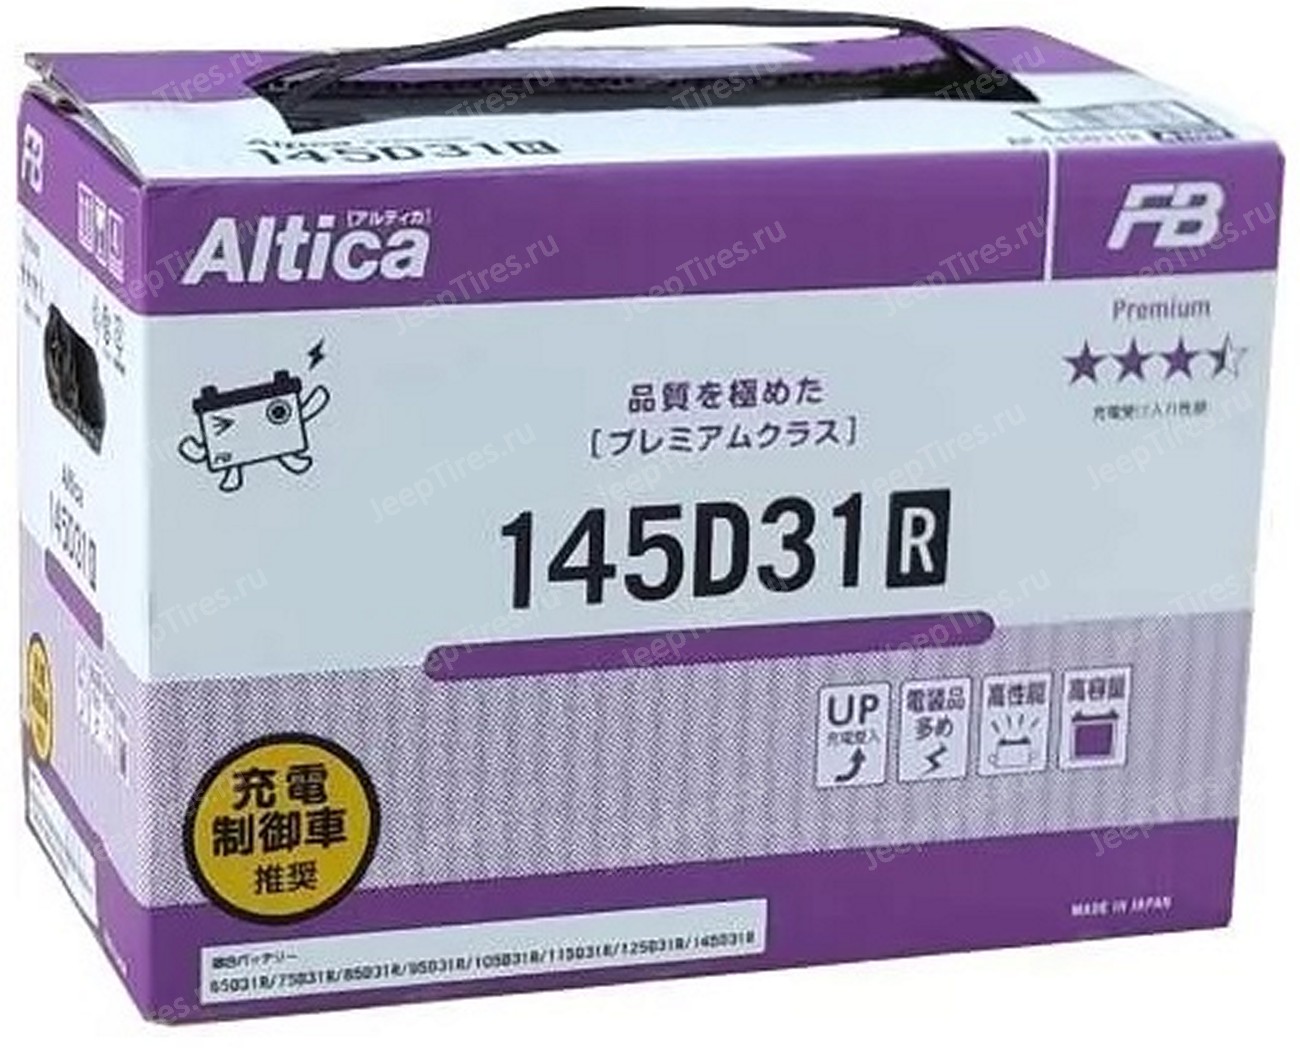 Furukawa battery altica. Fb Altica Premium 145d31r. Аккумулятор fb Altica Premium 98 Ah, 145d31r. Furukawa Battery ln2 (din 65). 145d31l Furukawa.